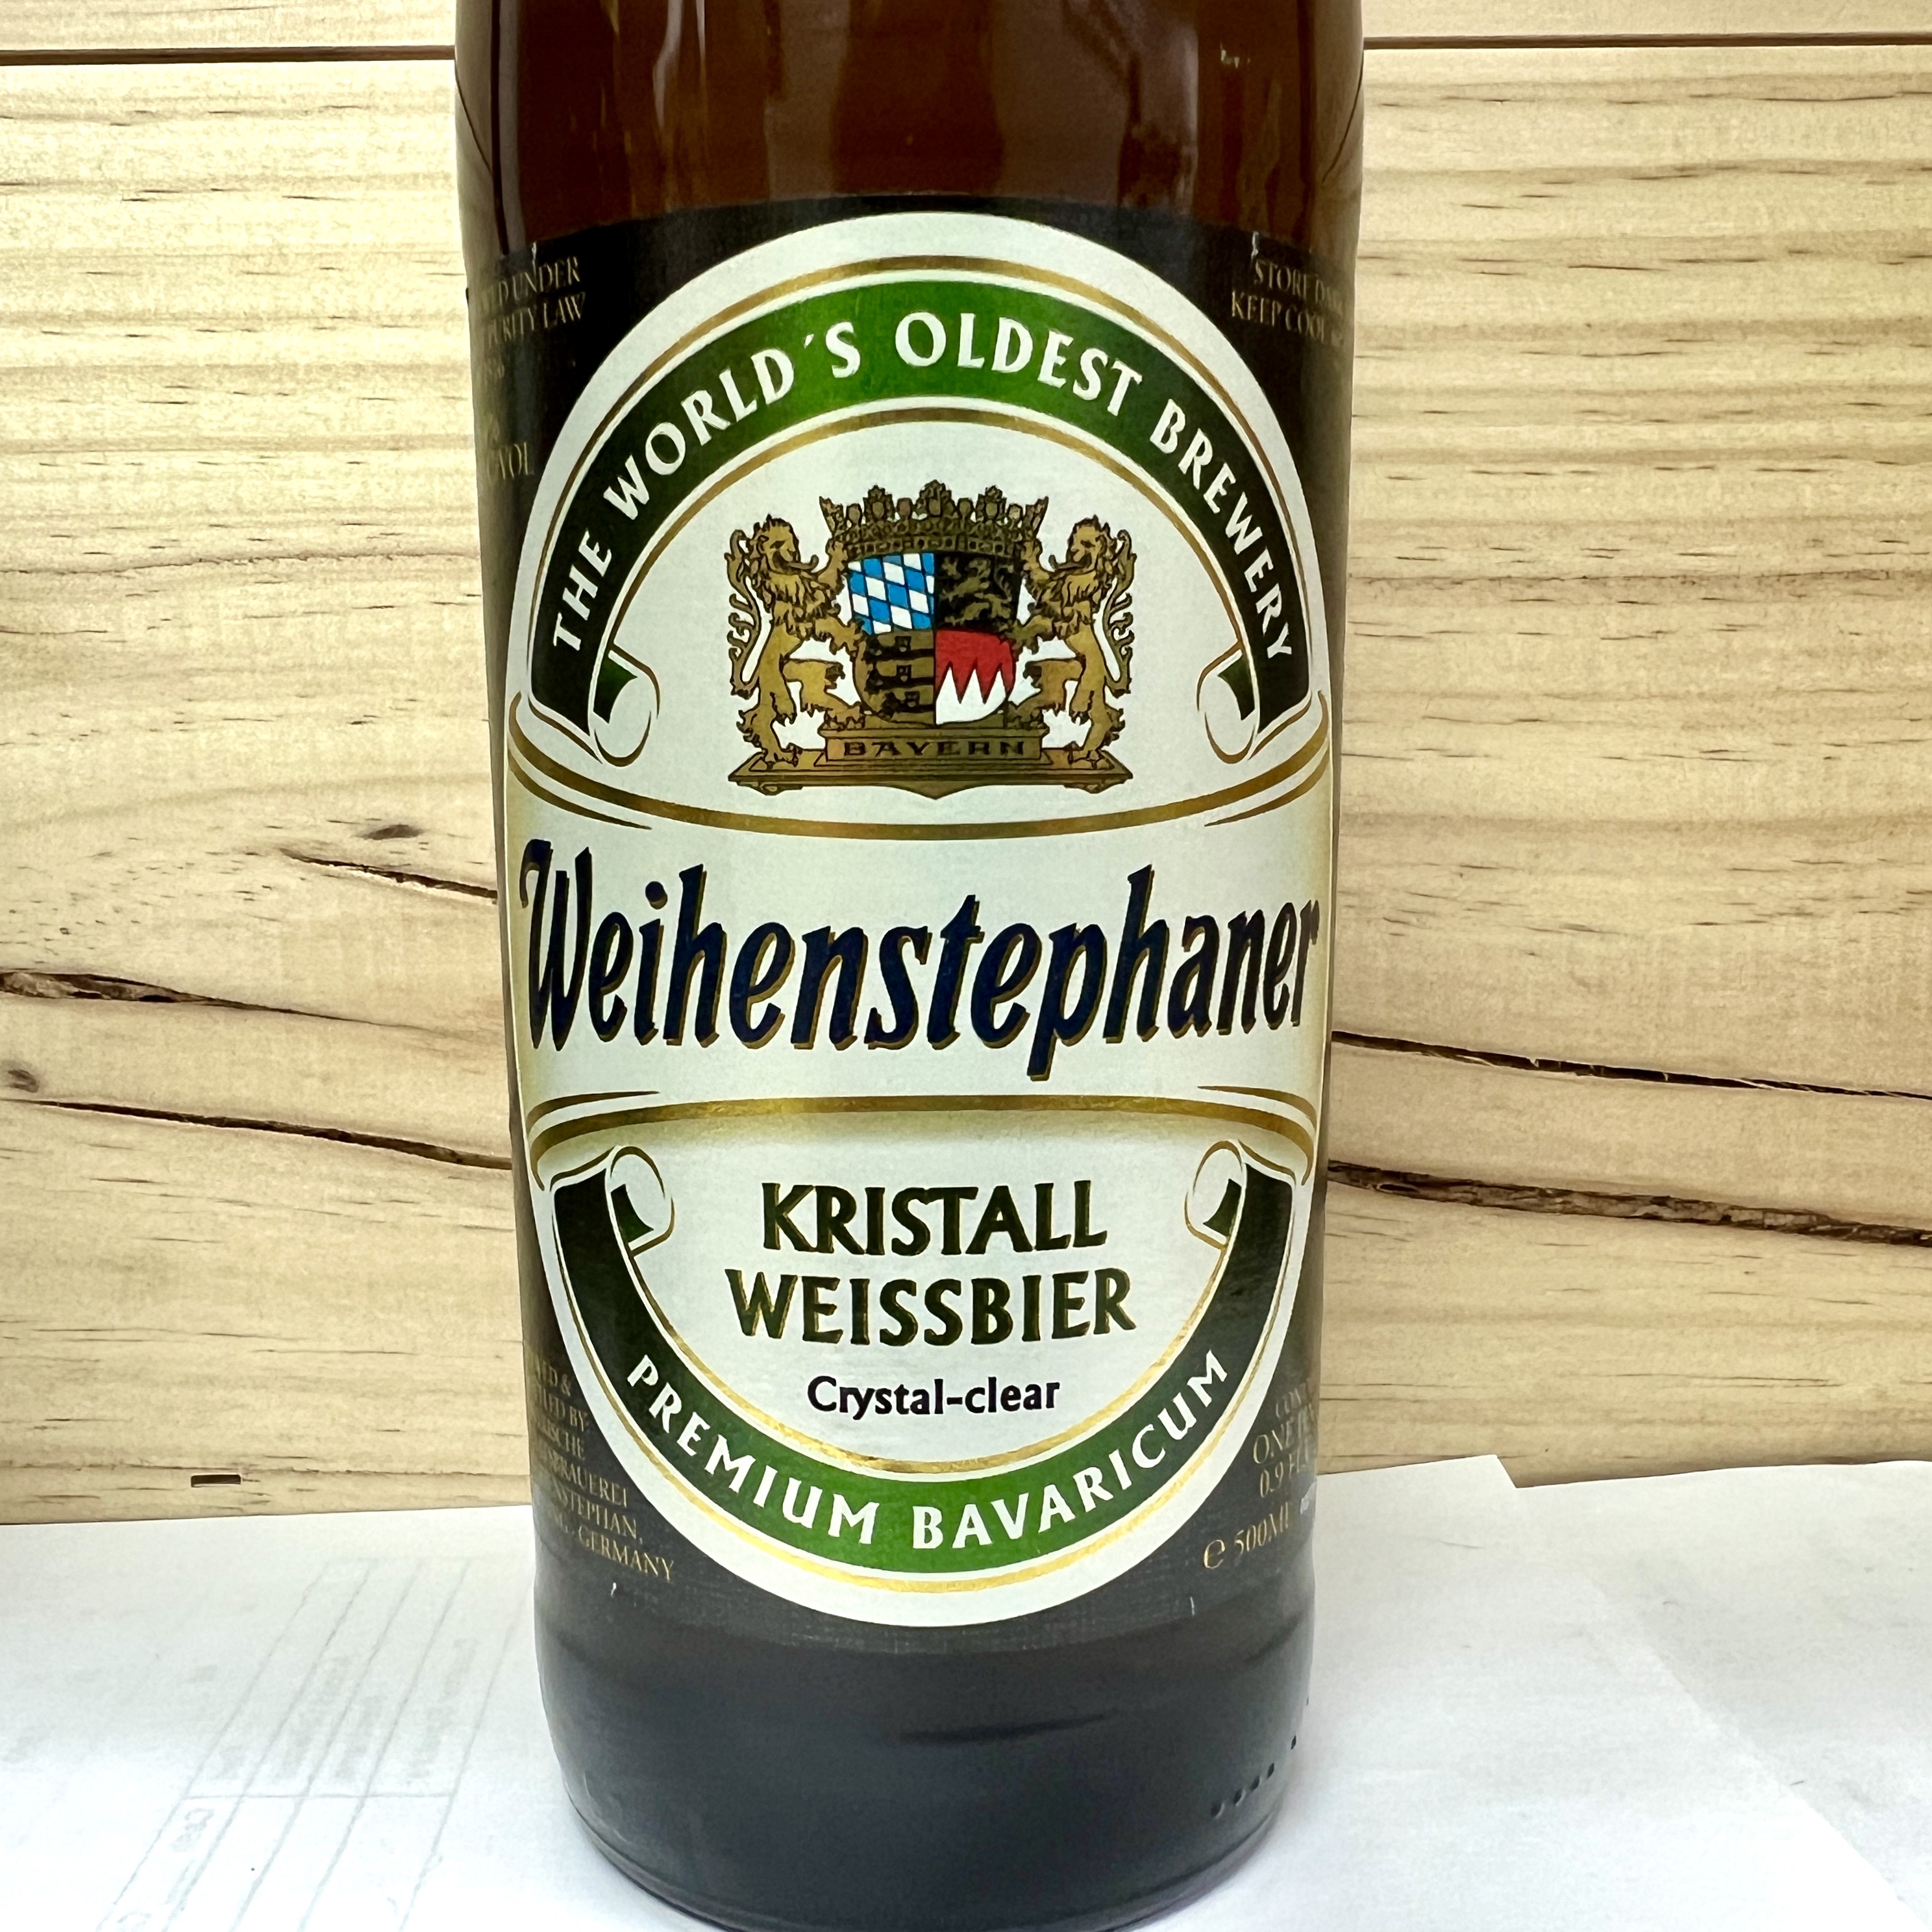 Weihenstephaner Kristall Weissbier 1 pint bottle